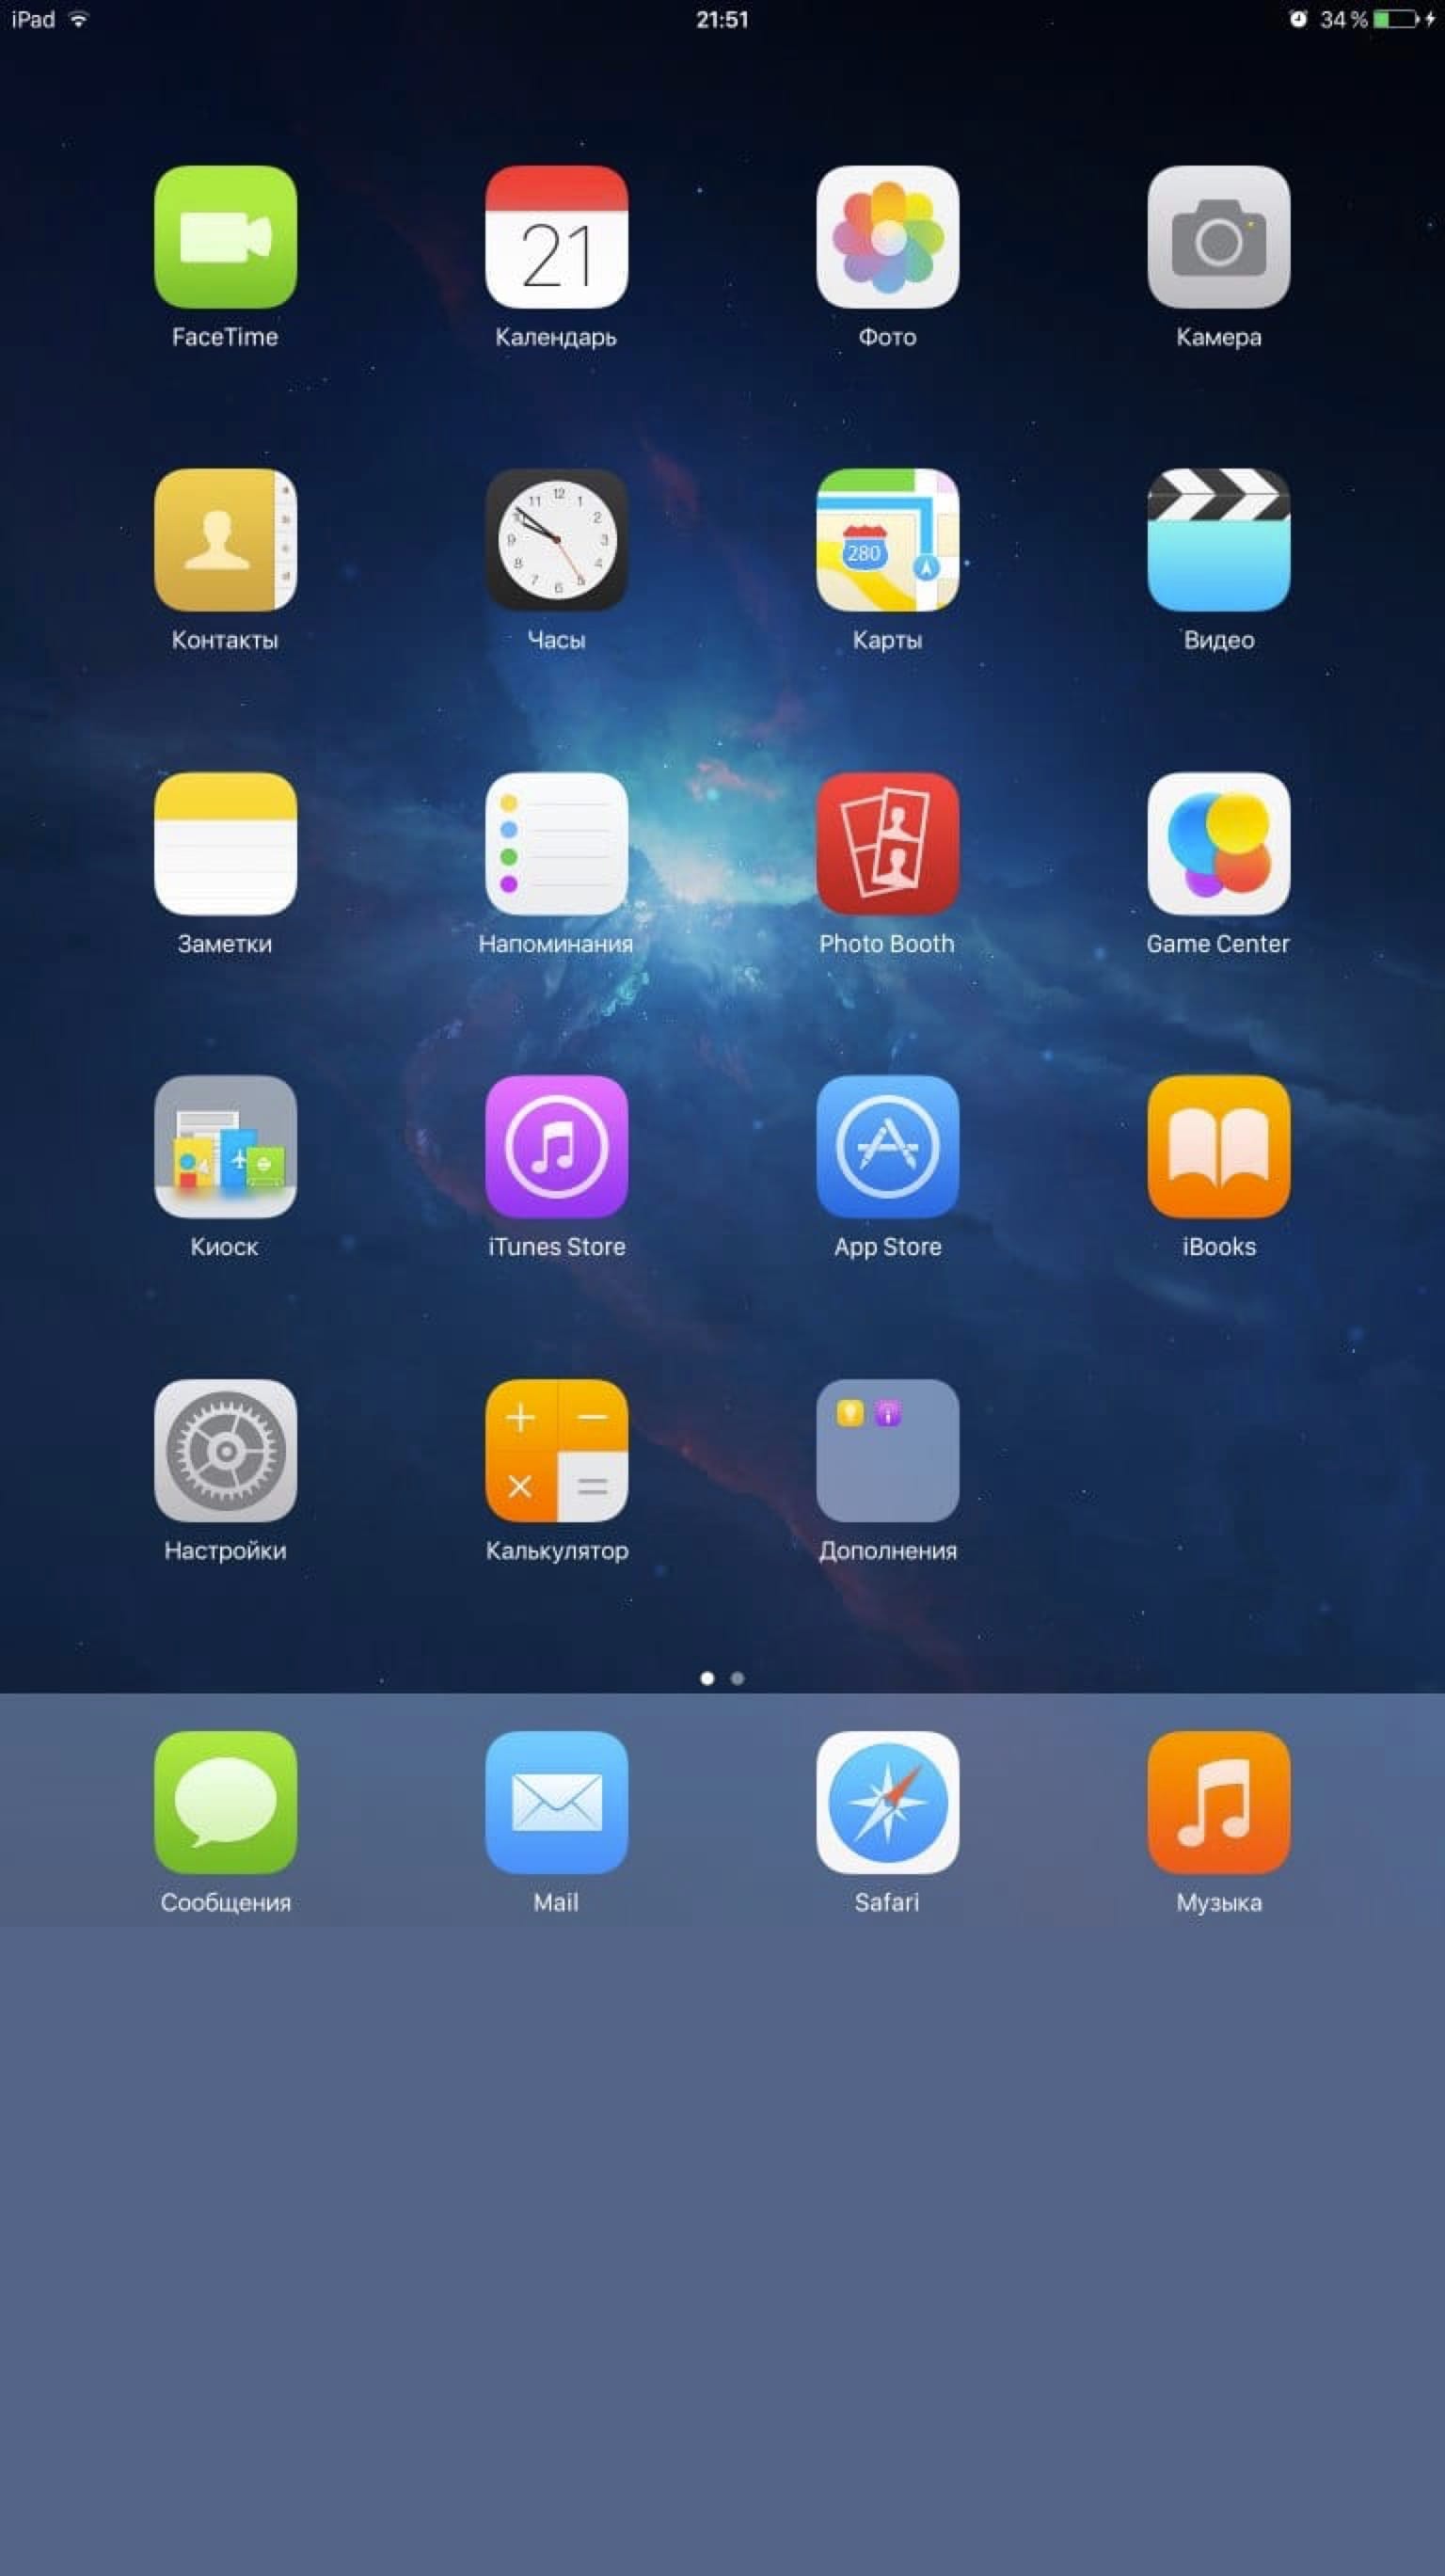 Download Flatty for iPad 0.1 free